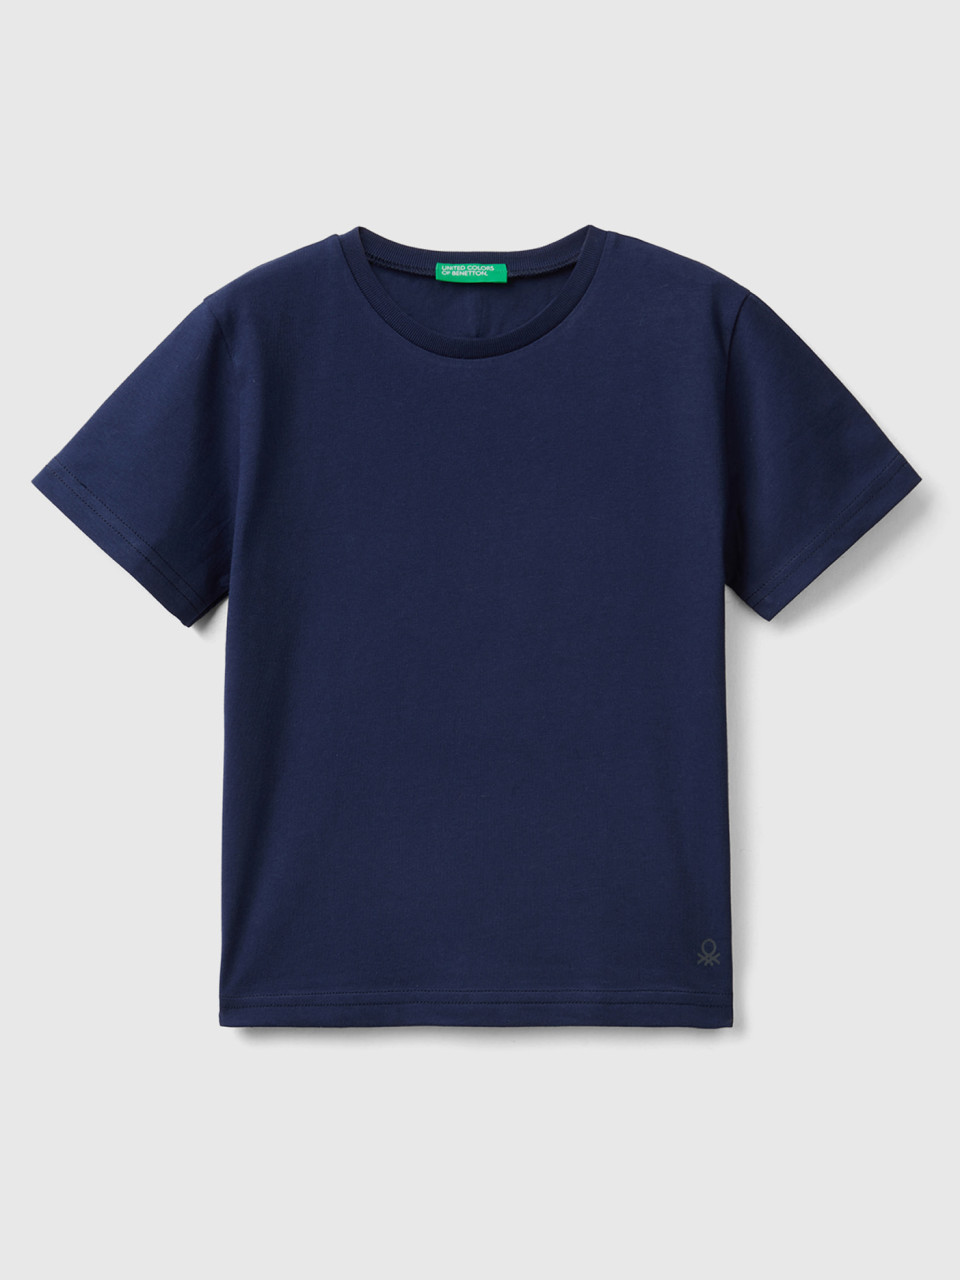 Benetton, T-shirt En Coton Bio, Bleu Foncé, Enfants